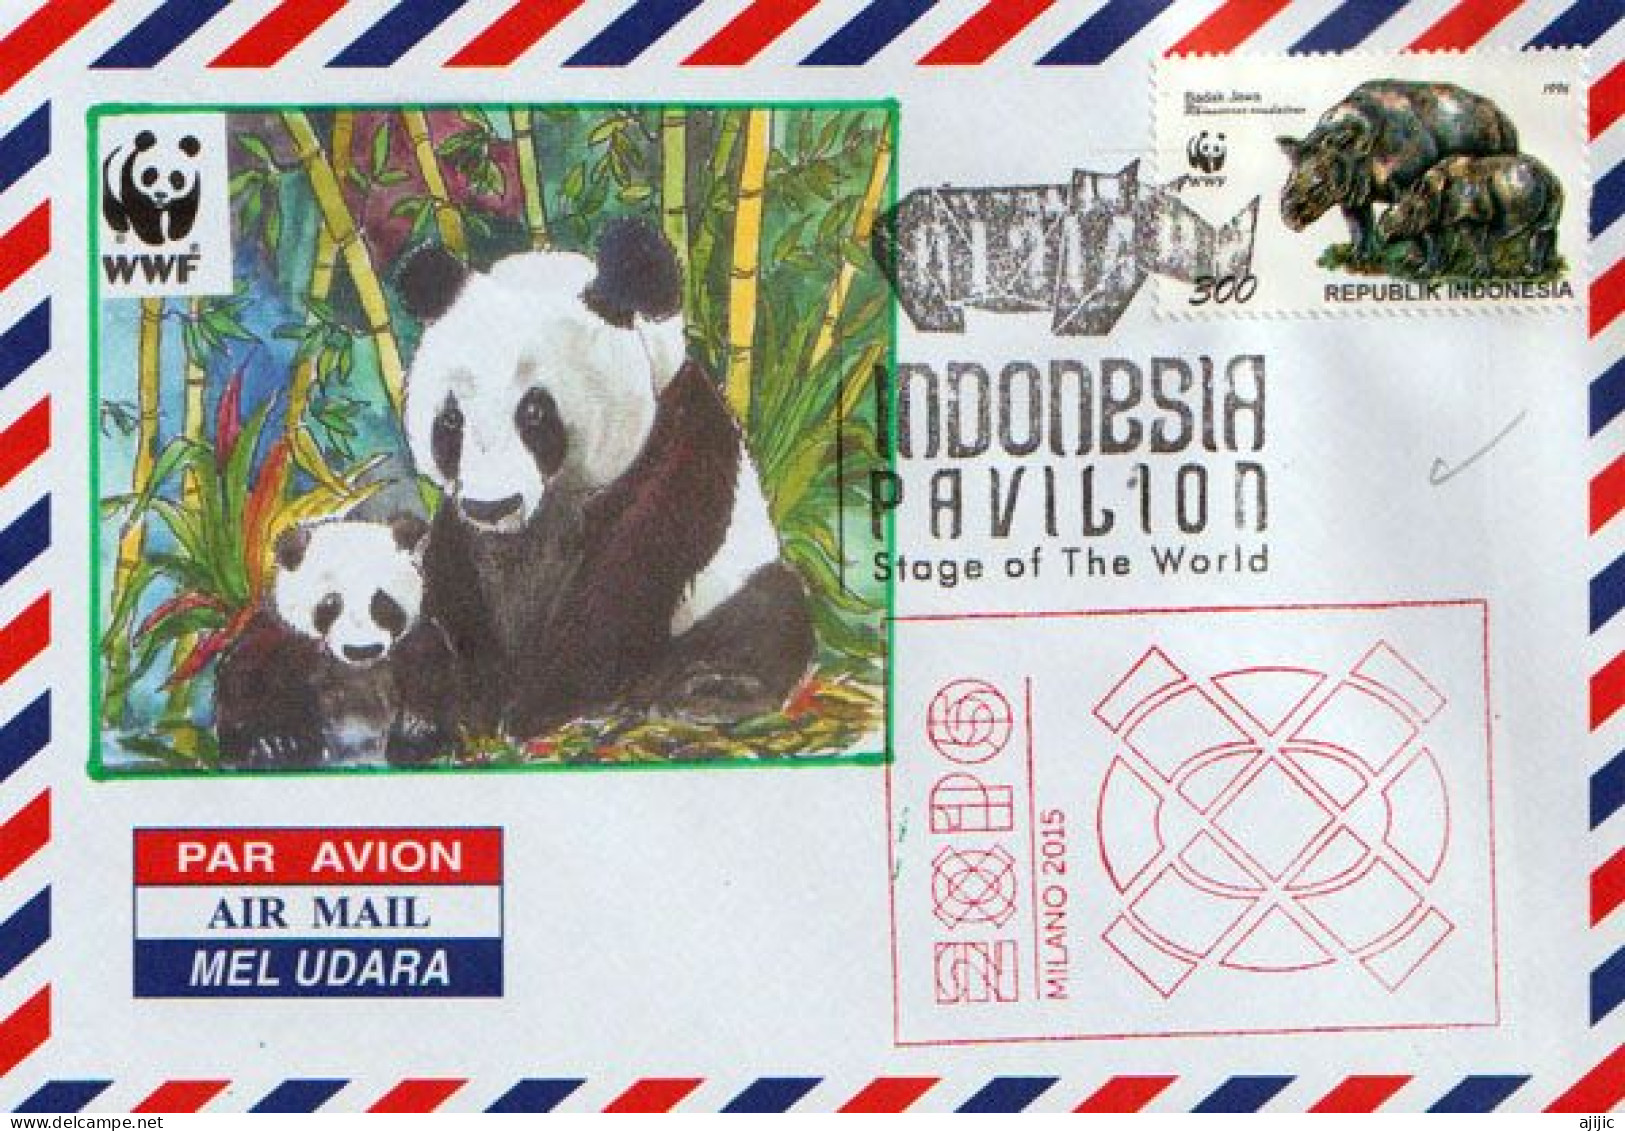 INDONESIE.Rhinocéros De Sumatra (WWF) En Danger D'extinction, Sur Lettre Du Pavillon INDONESIE.EXPO UNIVERSELLE MILAN - Rhinoceros